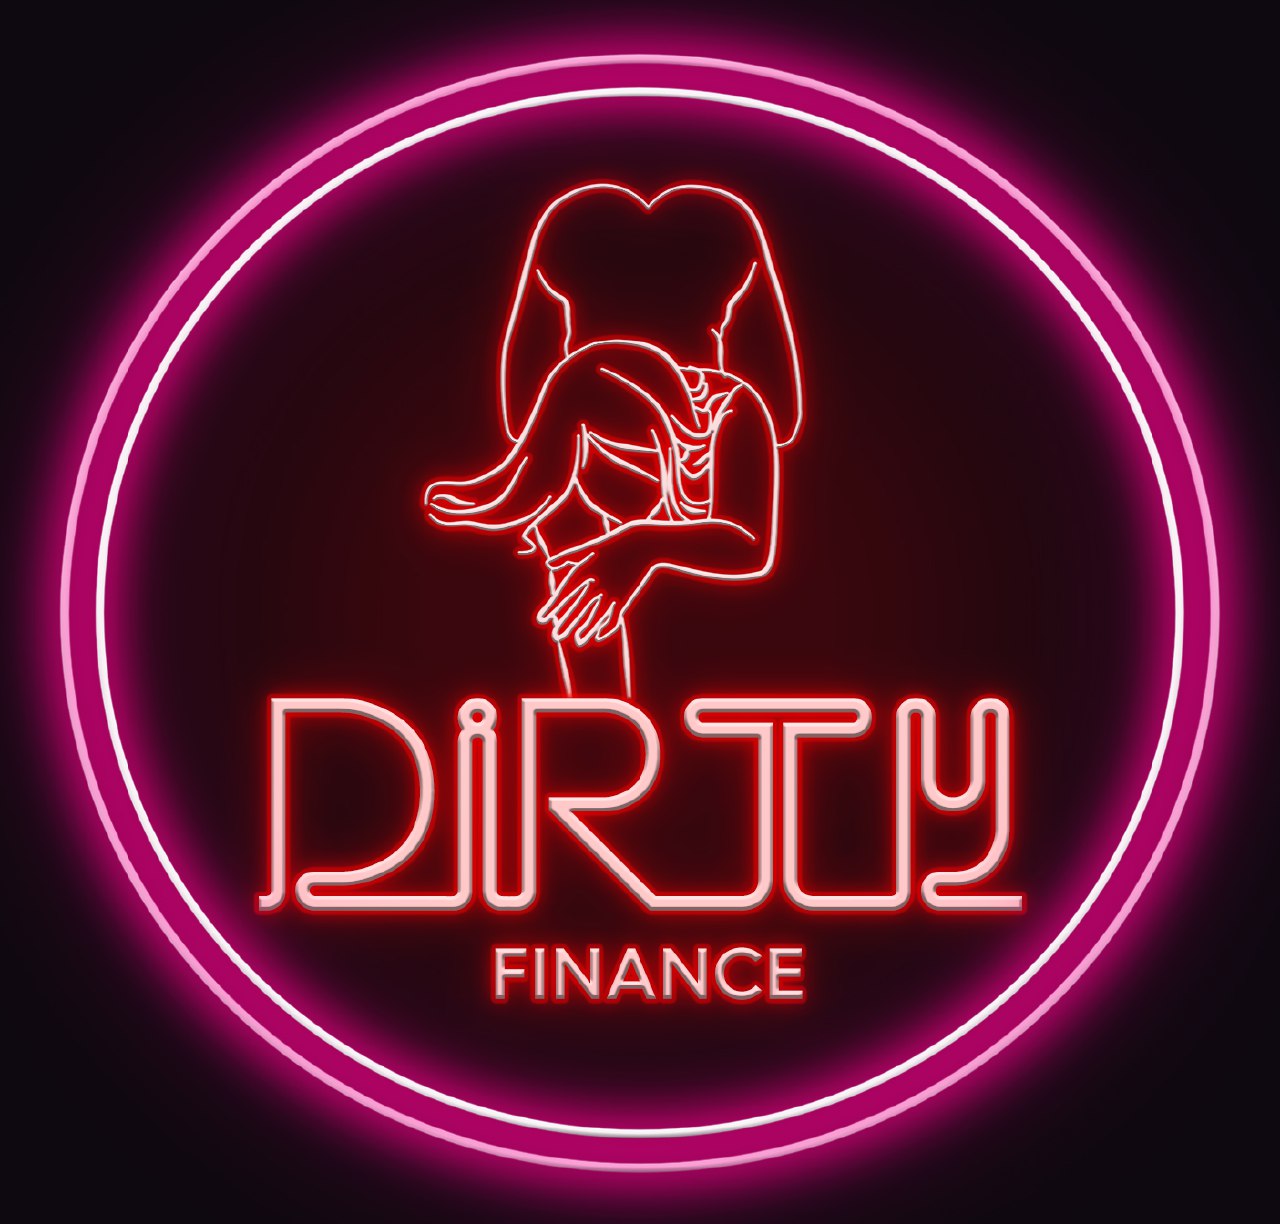 www.dirty.finance favicon